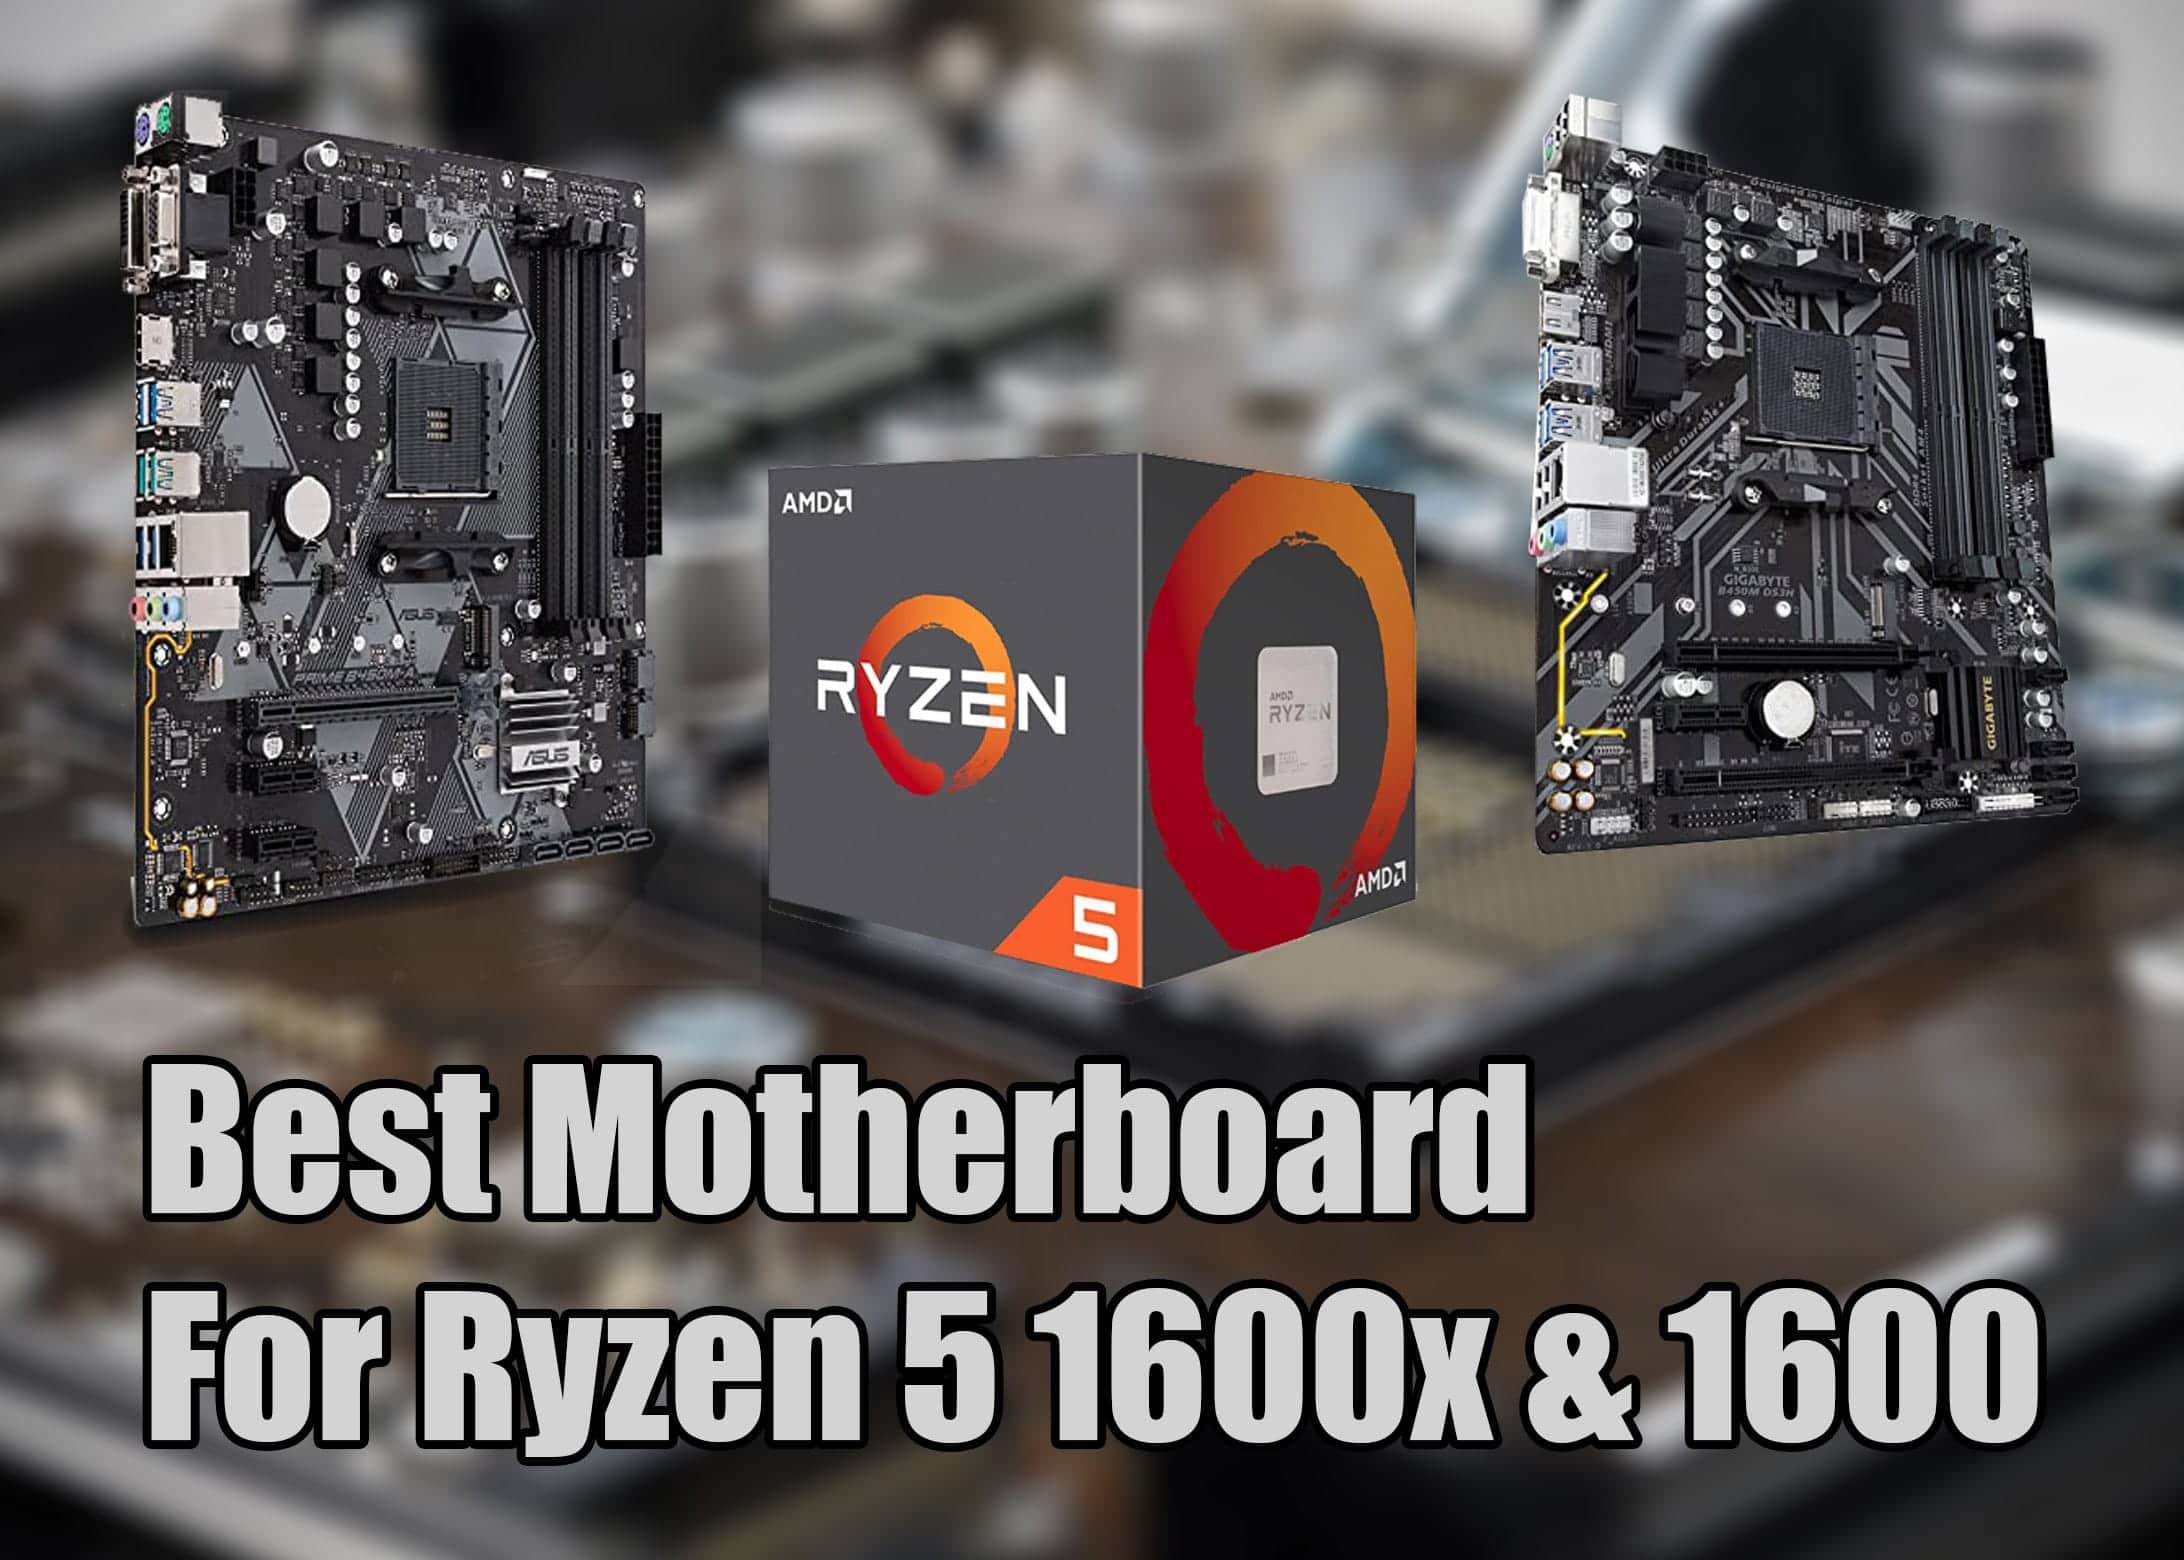 Best Motherboard For Ryzen 5 1600x & 1600 - The TechnoBurst